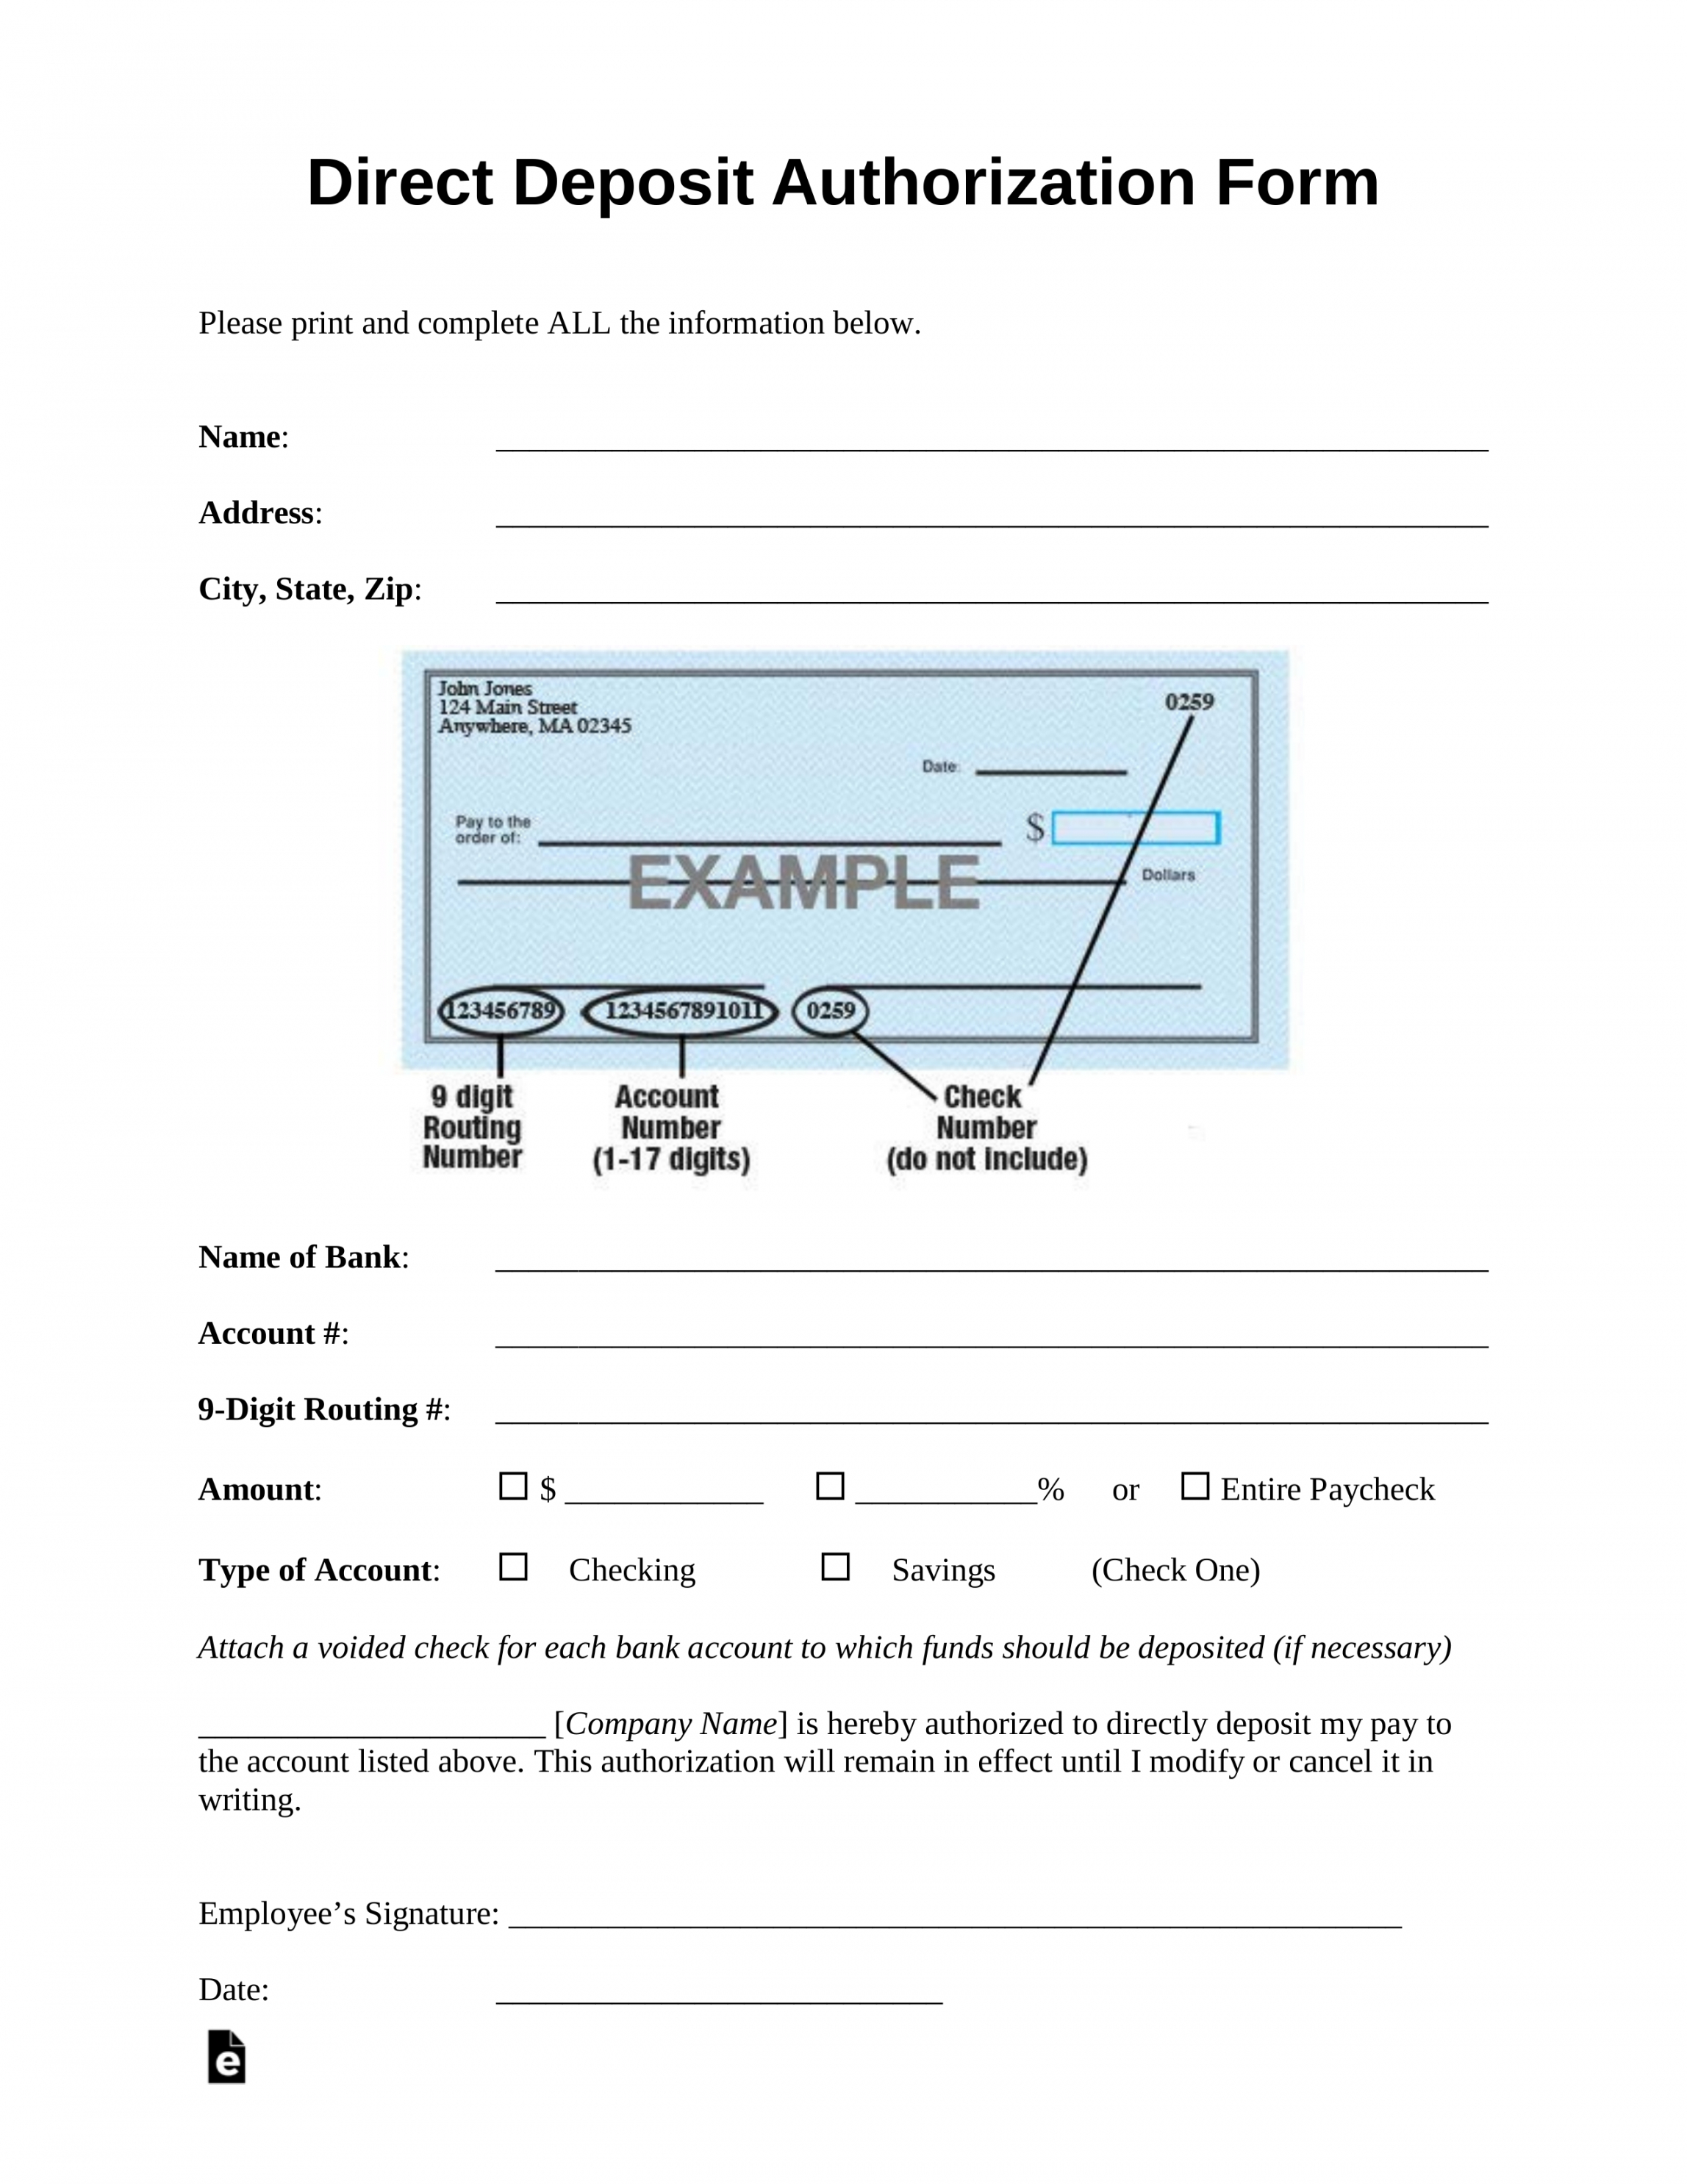 free direct deposit authorization forms  pdf  word vendor direct deposit authorization form template